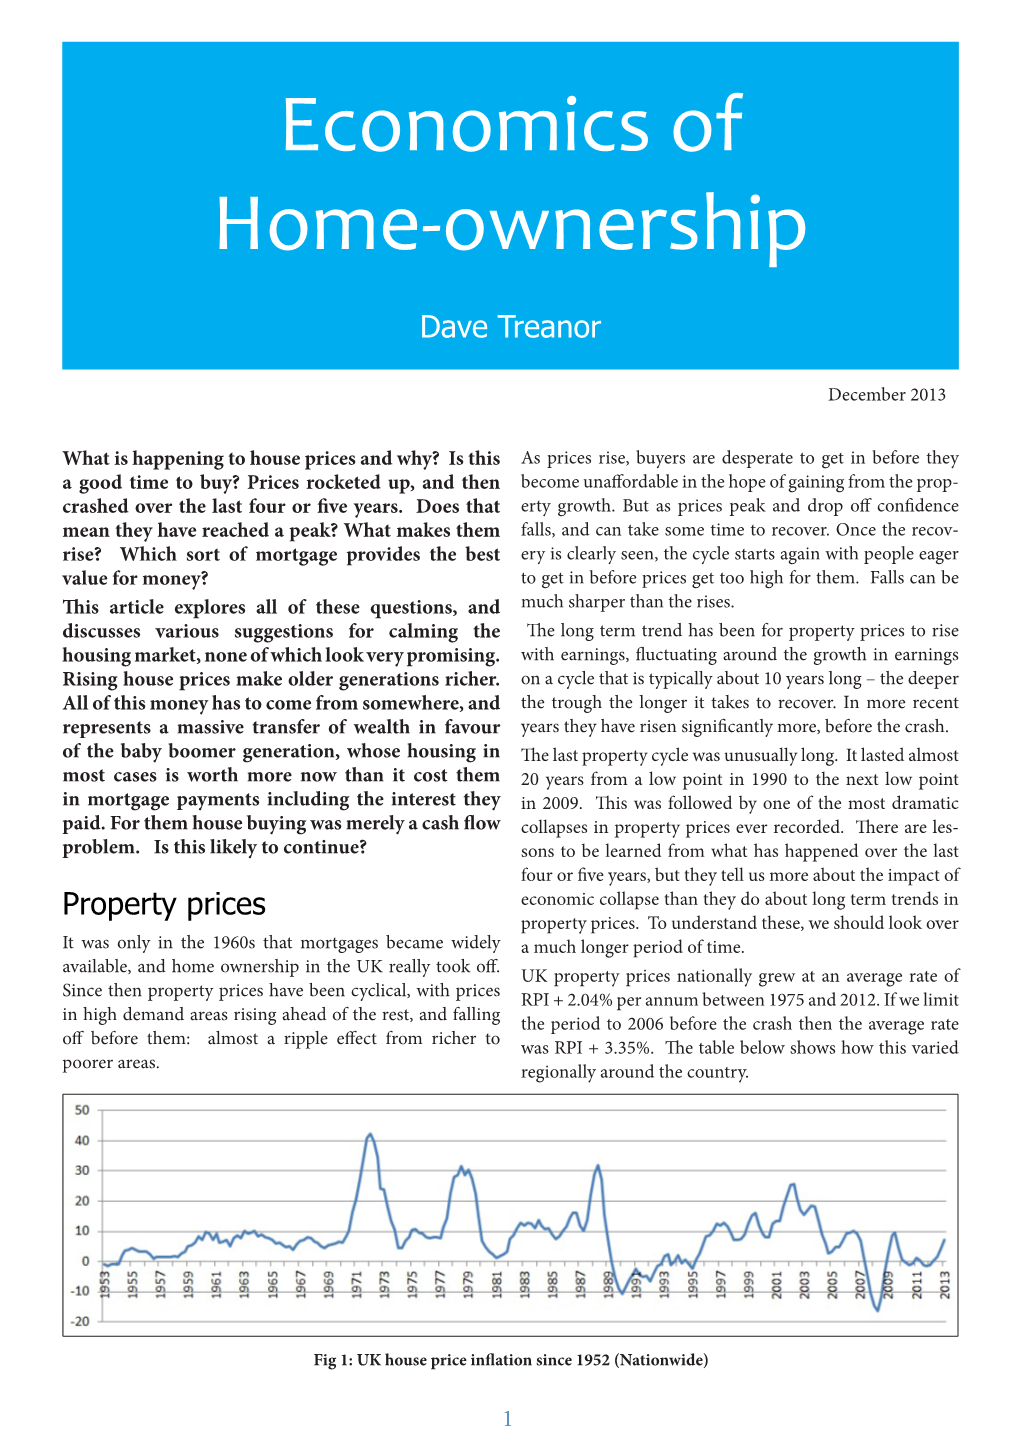 Economics of Home-Ownership